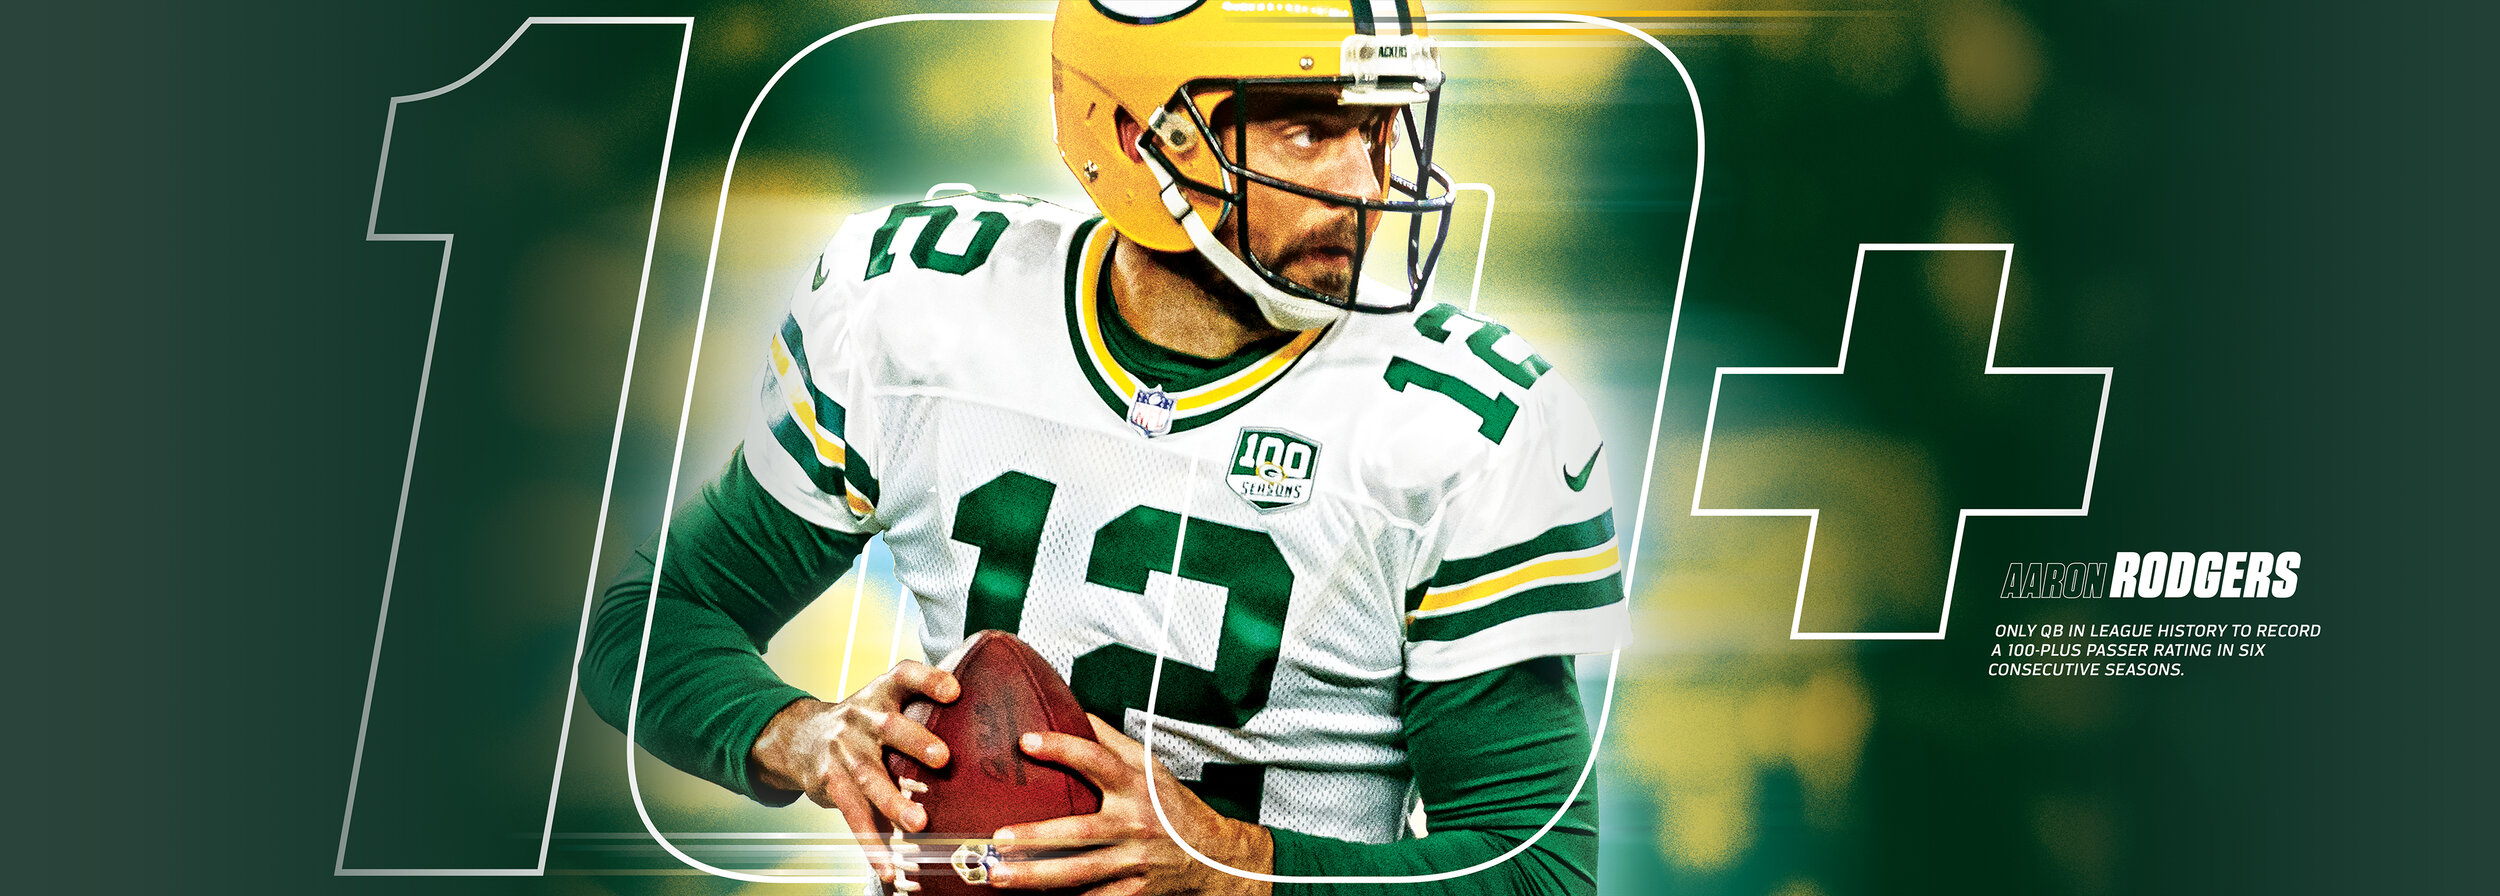 KO19_Packers_Historic_Rodgers.jpg